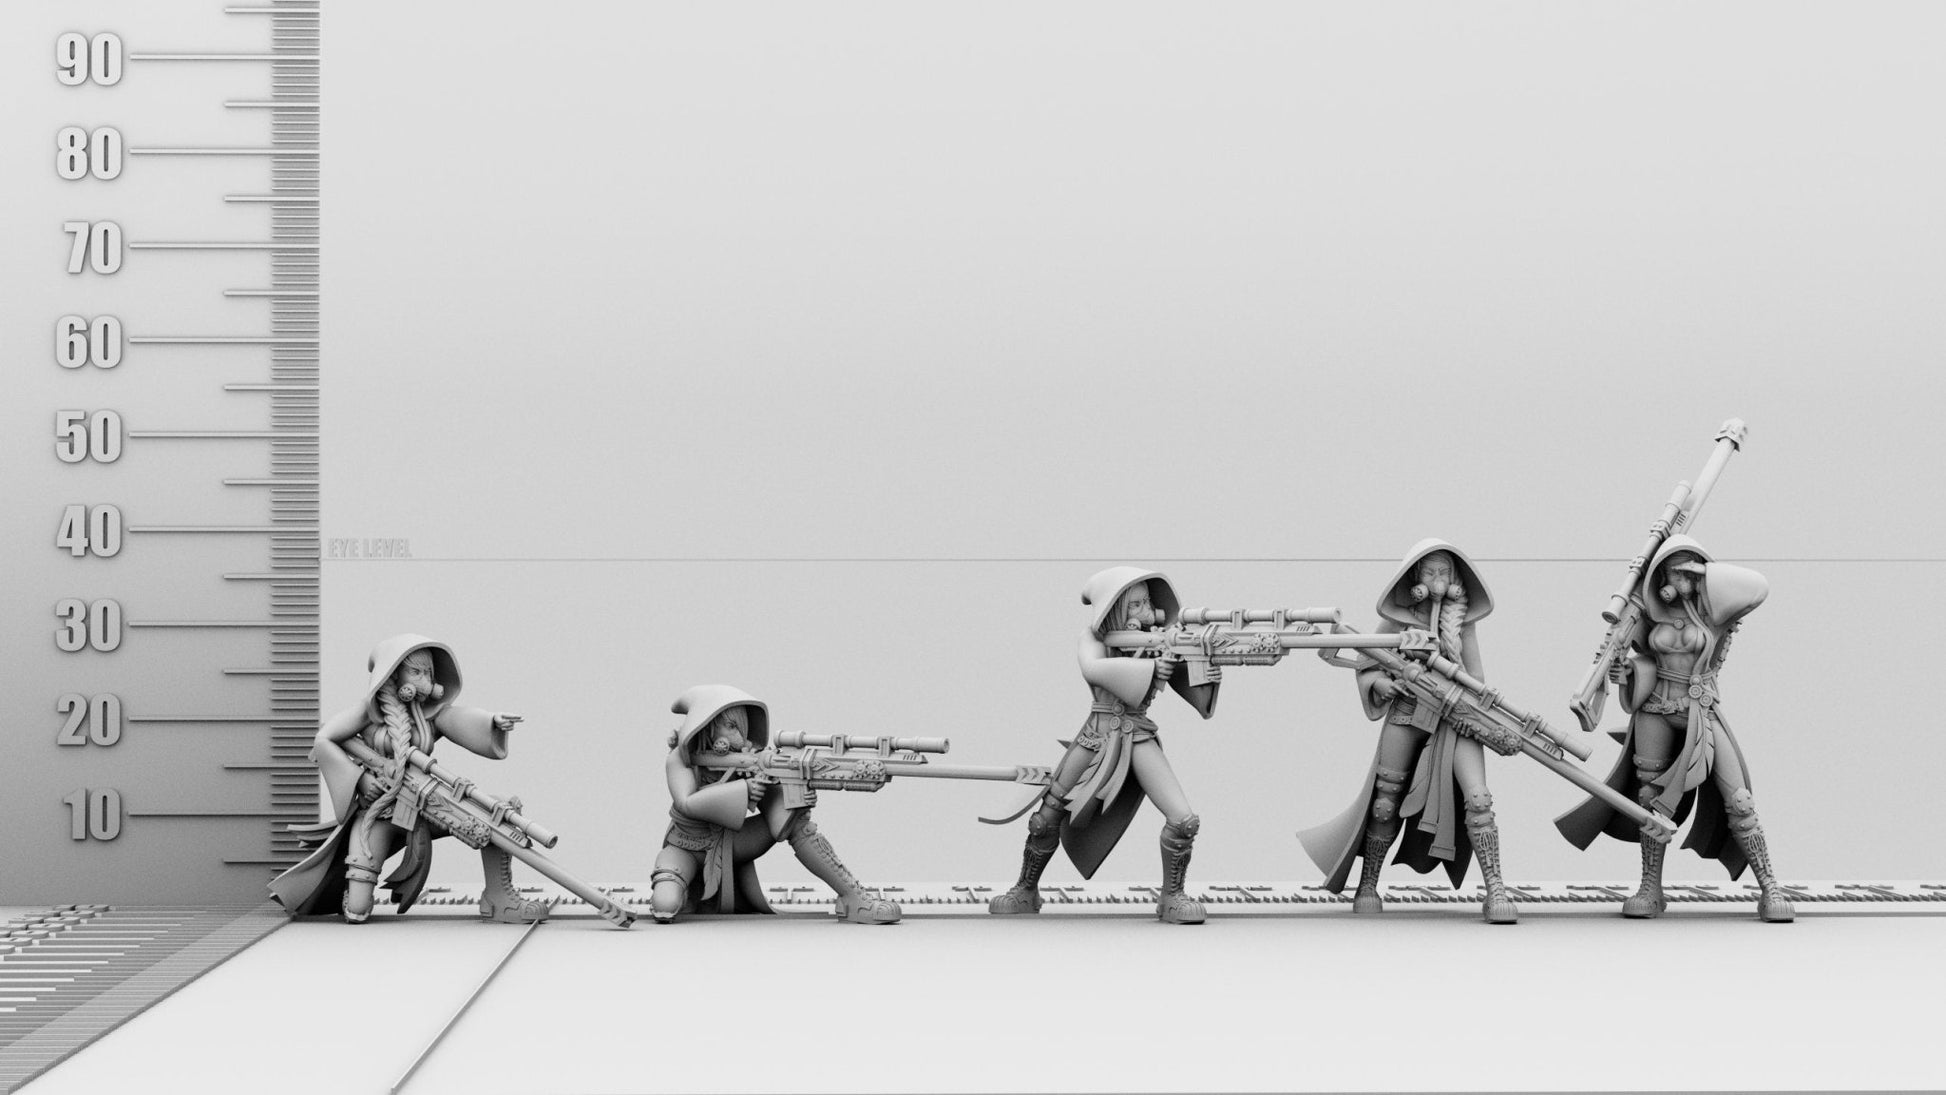 Aurora faction | Trooper Squad | Trooper 1 | 3D Printed | Figurine | Feathr0z